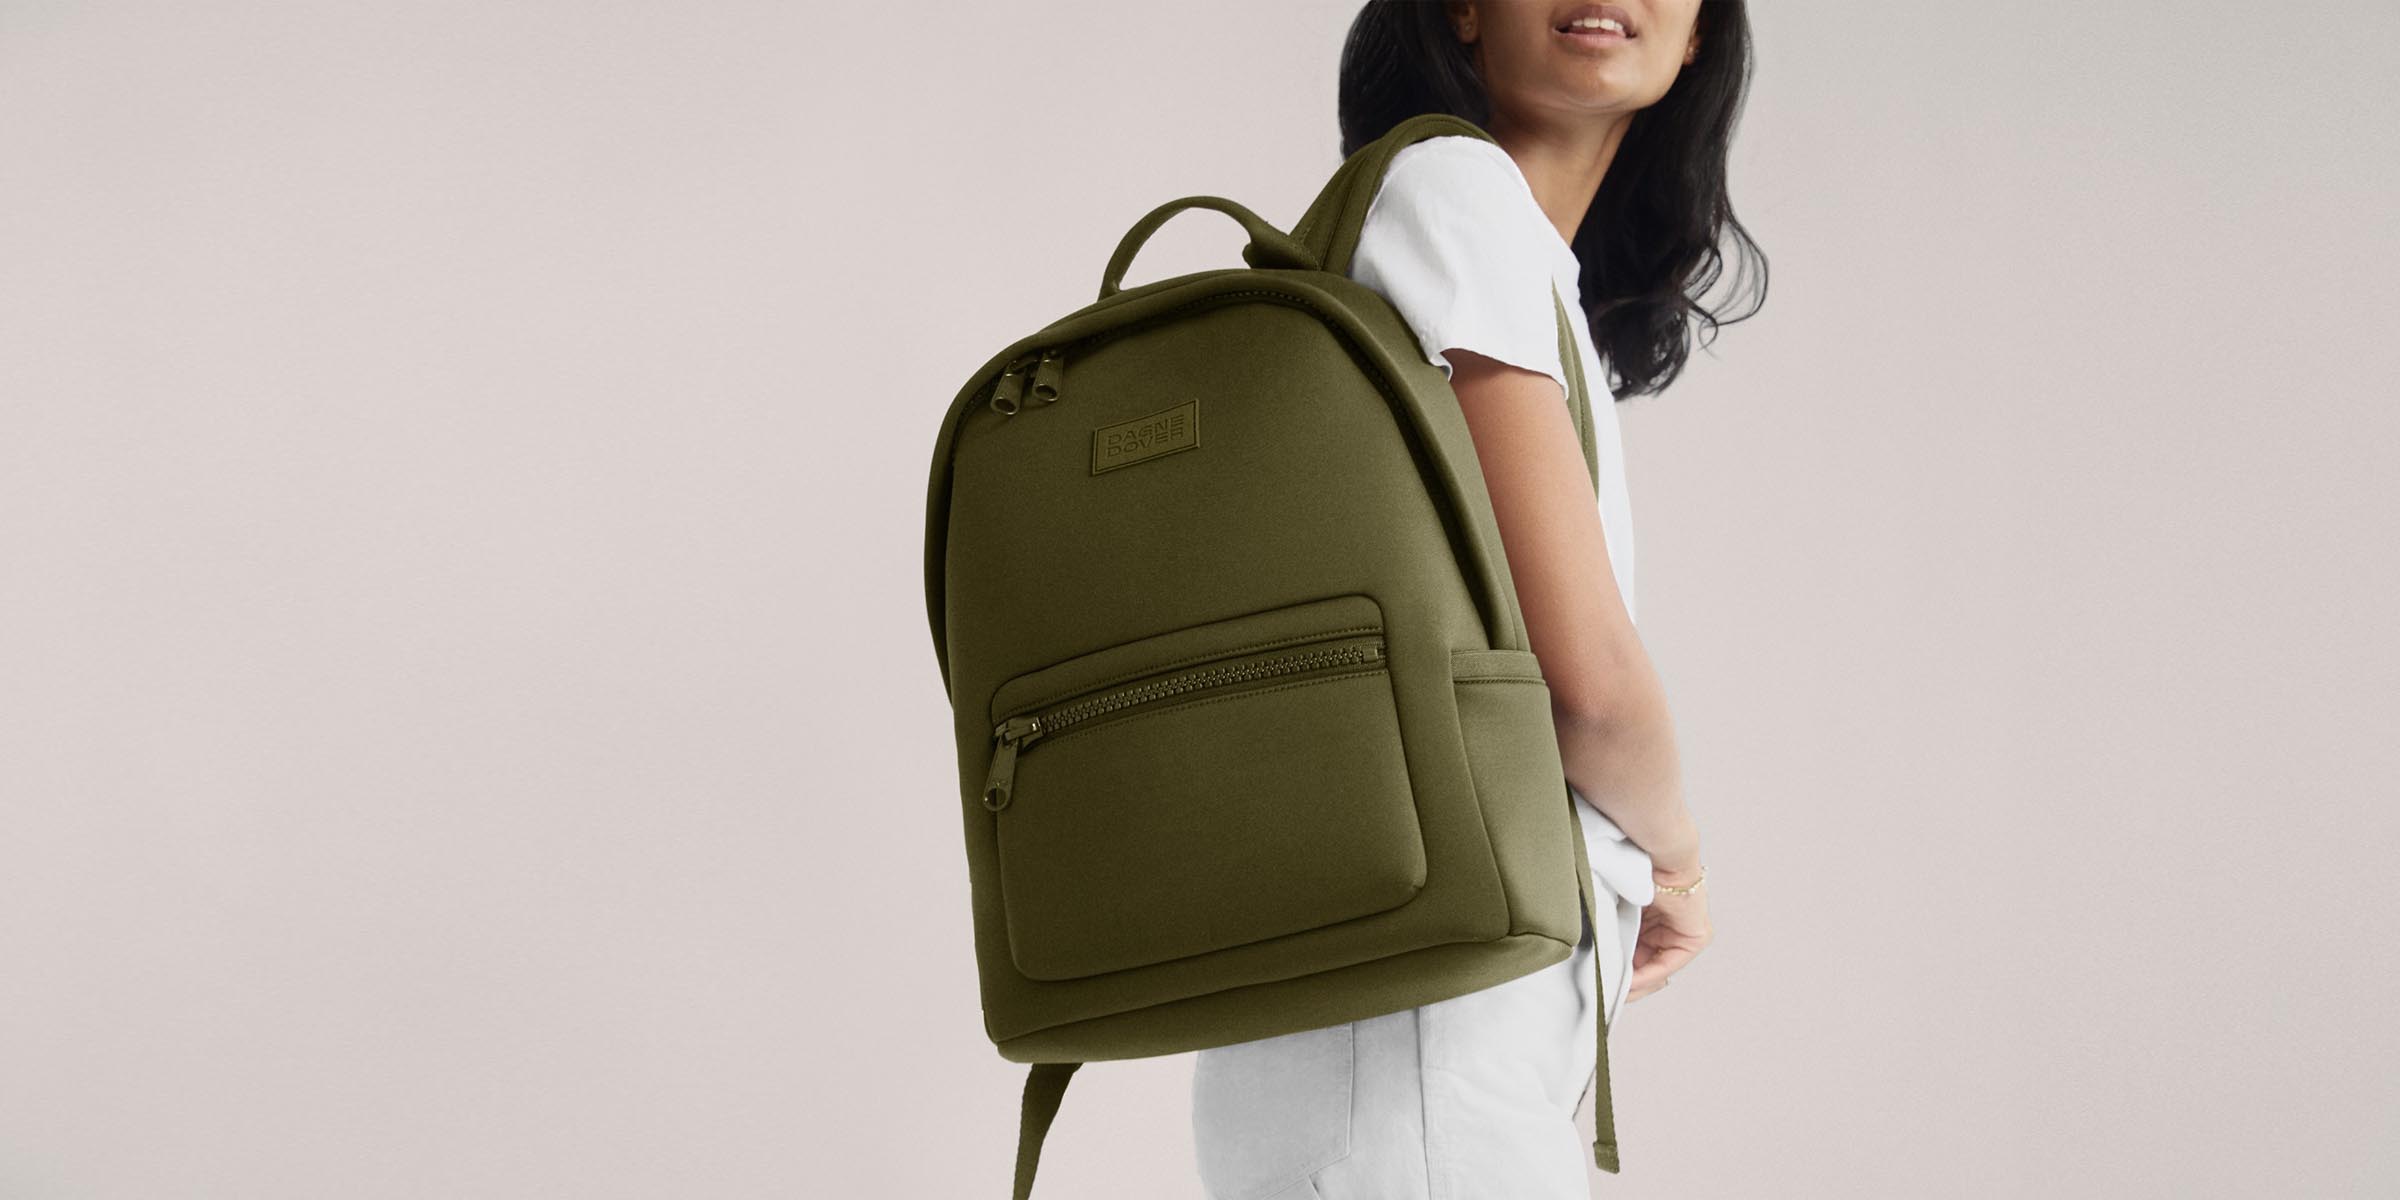 13 Best Backpacks For Women: Stylish & Practical